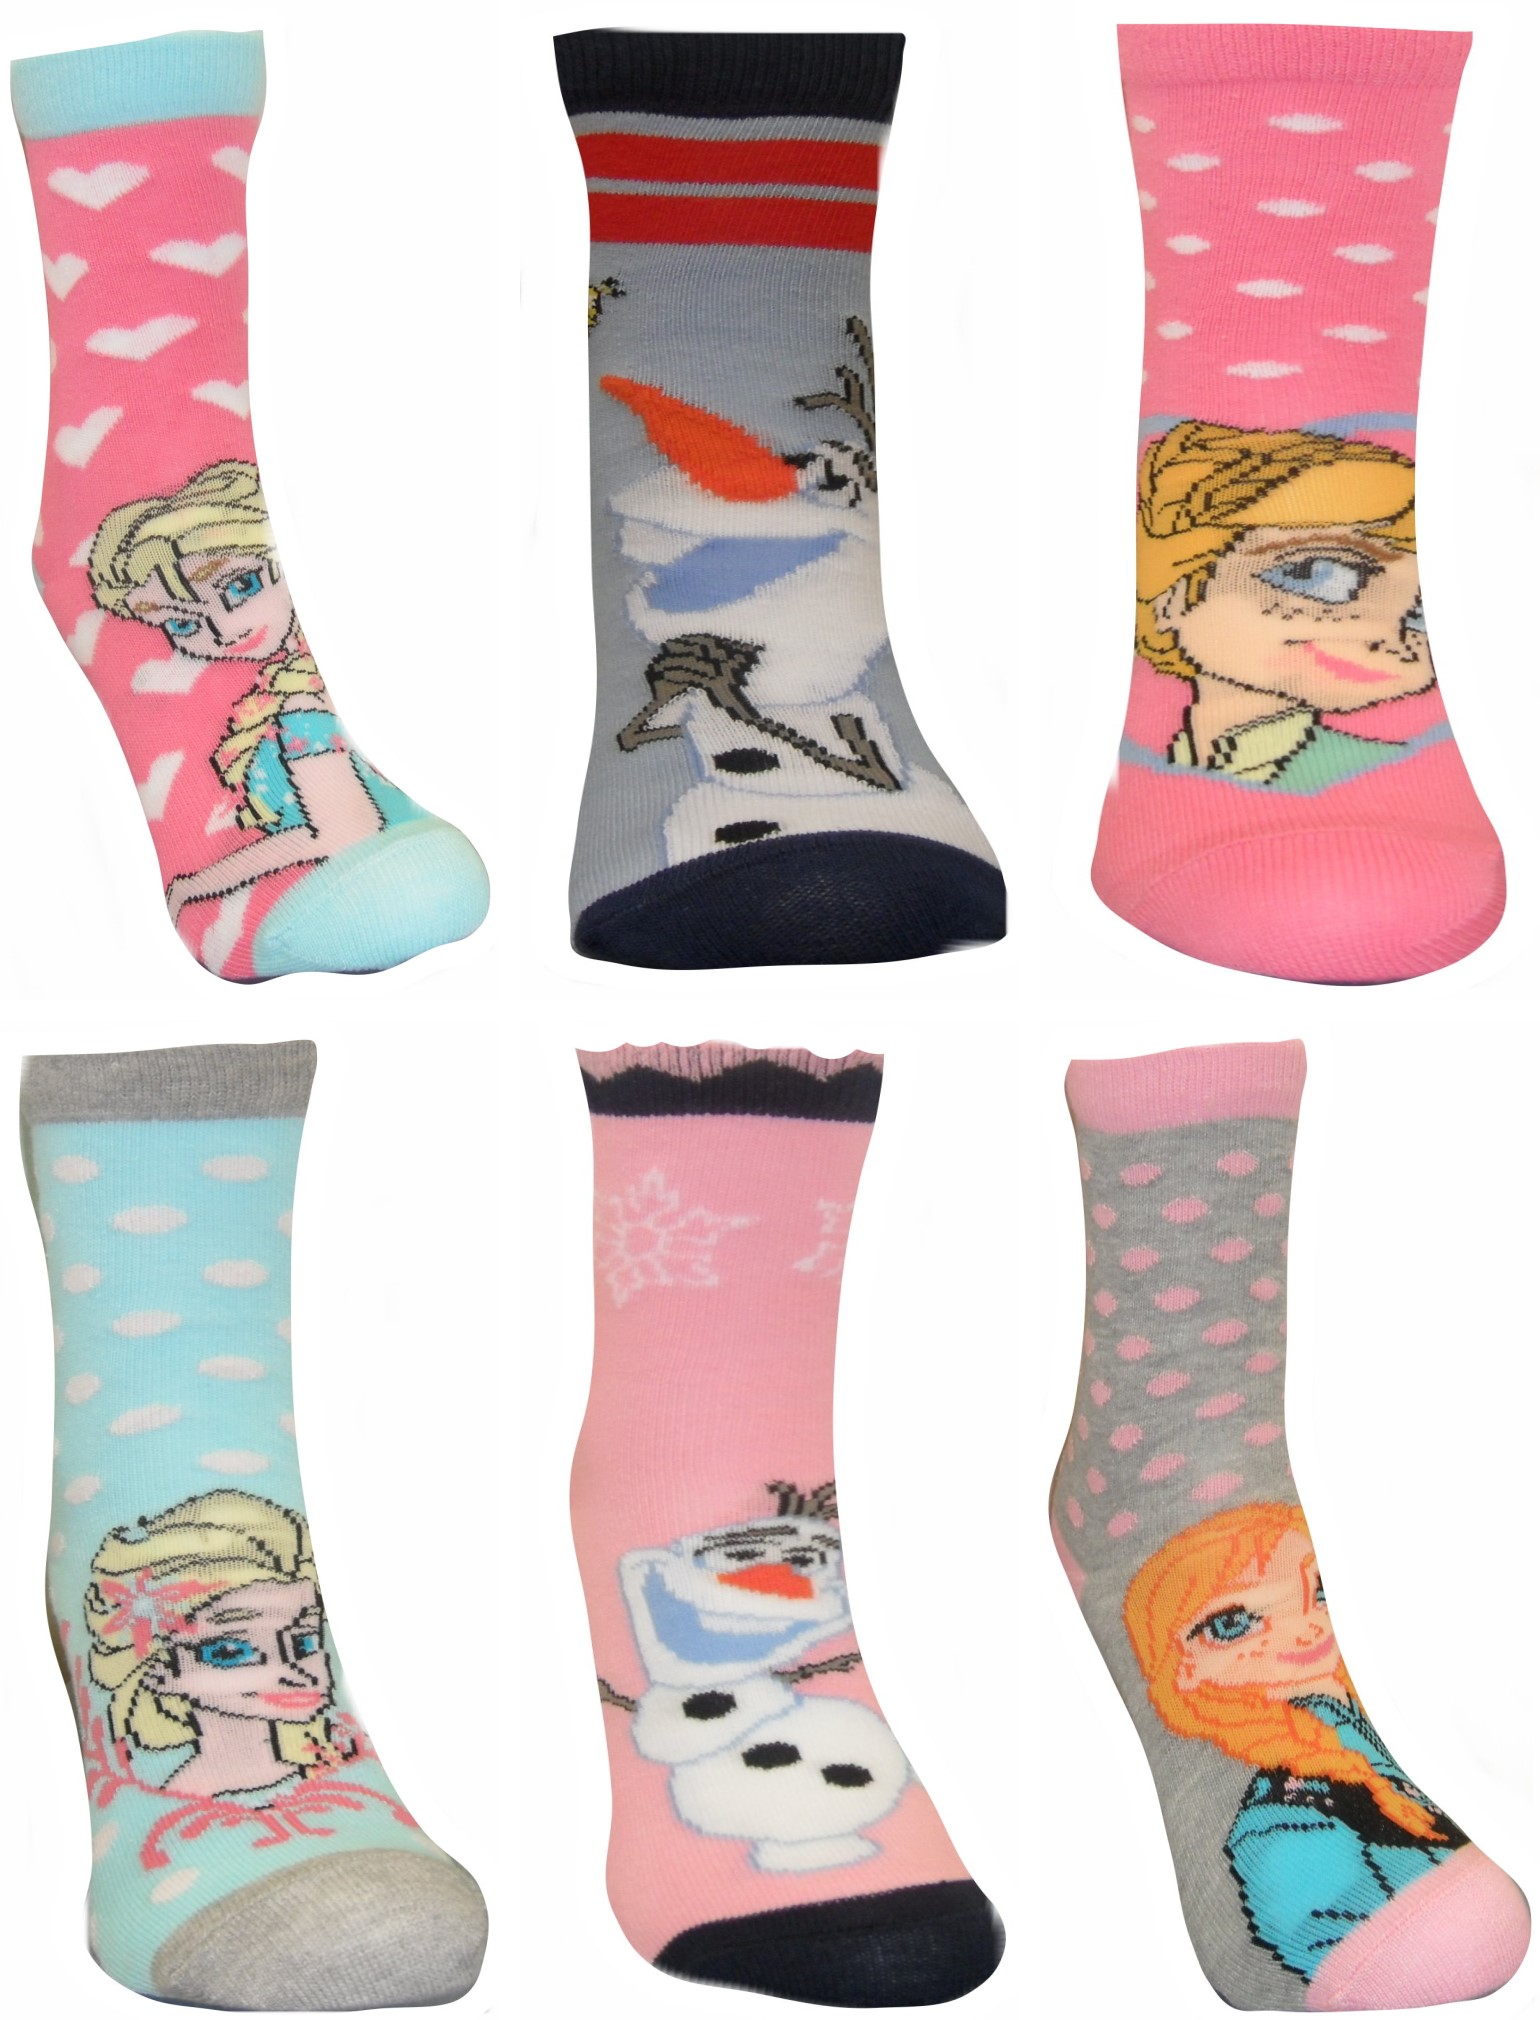 Disney Frozen Girl's Socks.jpg  by Thingimijigs